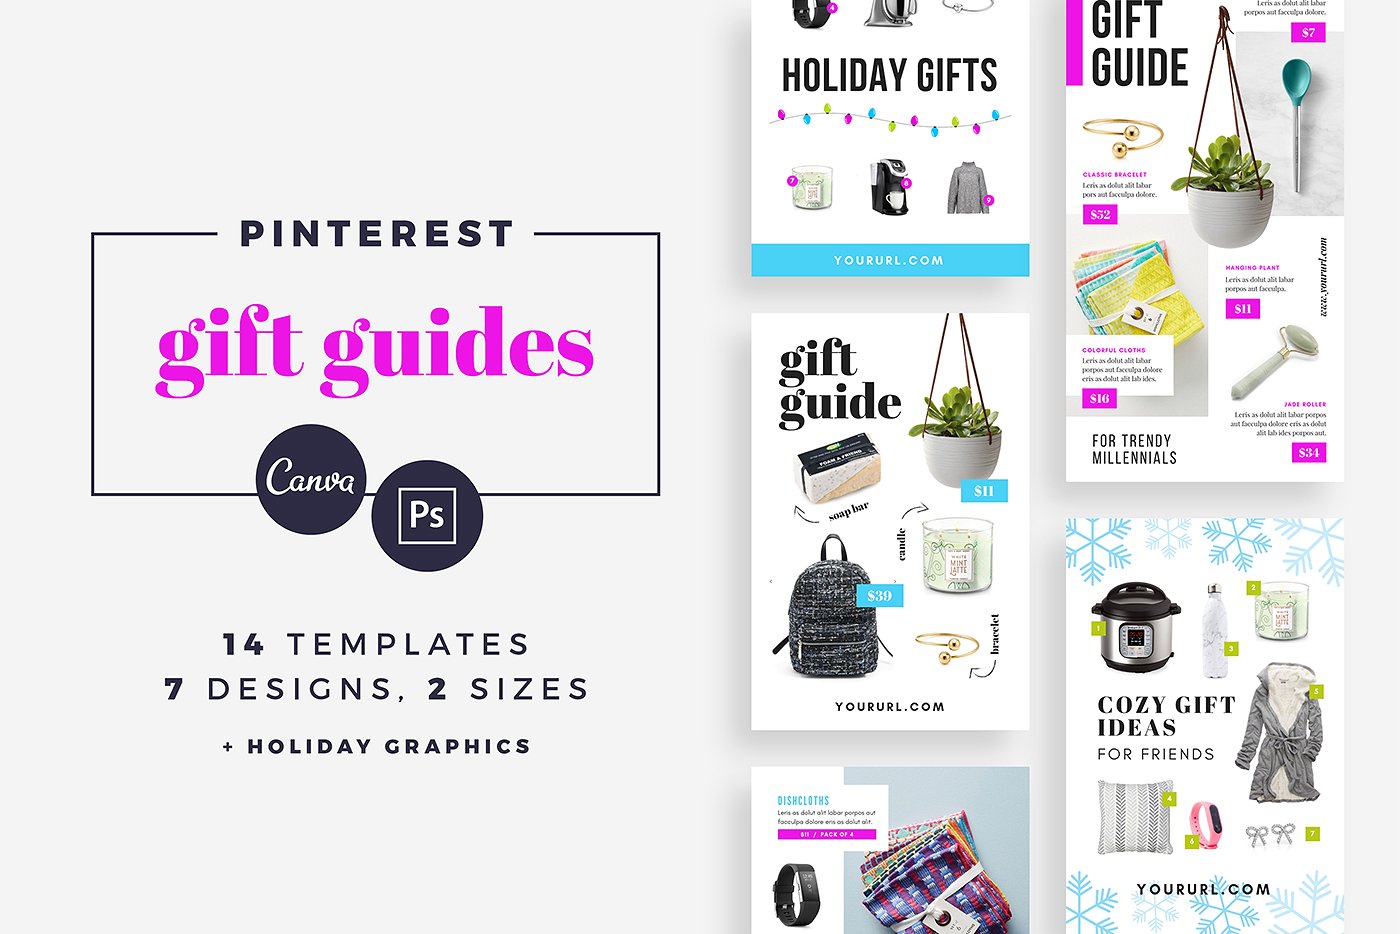 礼品指南社交媒体模板素材库精选 Gift Guide Pinterest Templates [psd]插图